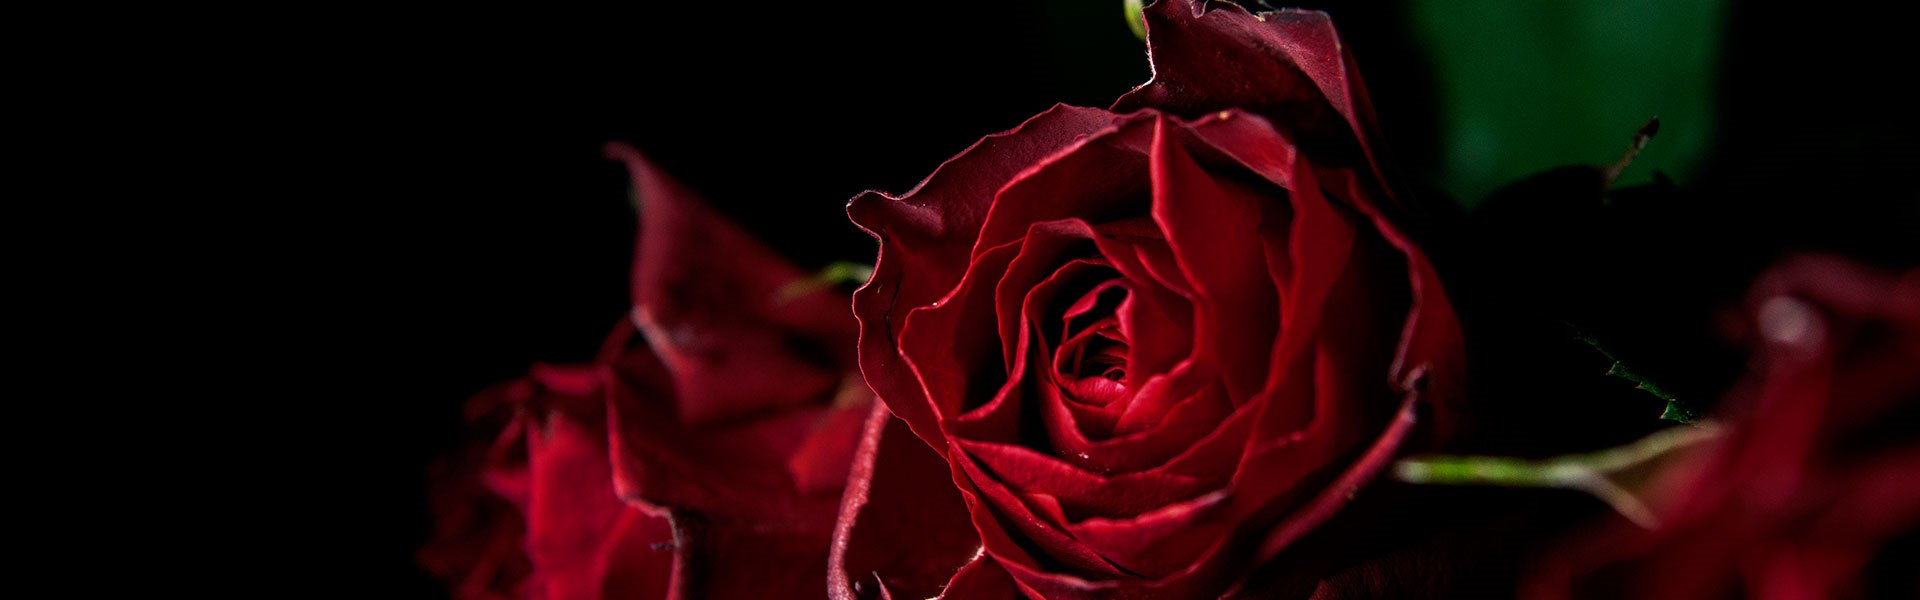 dark red roses - wide